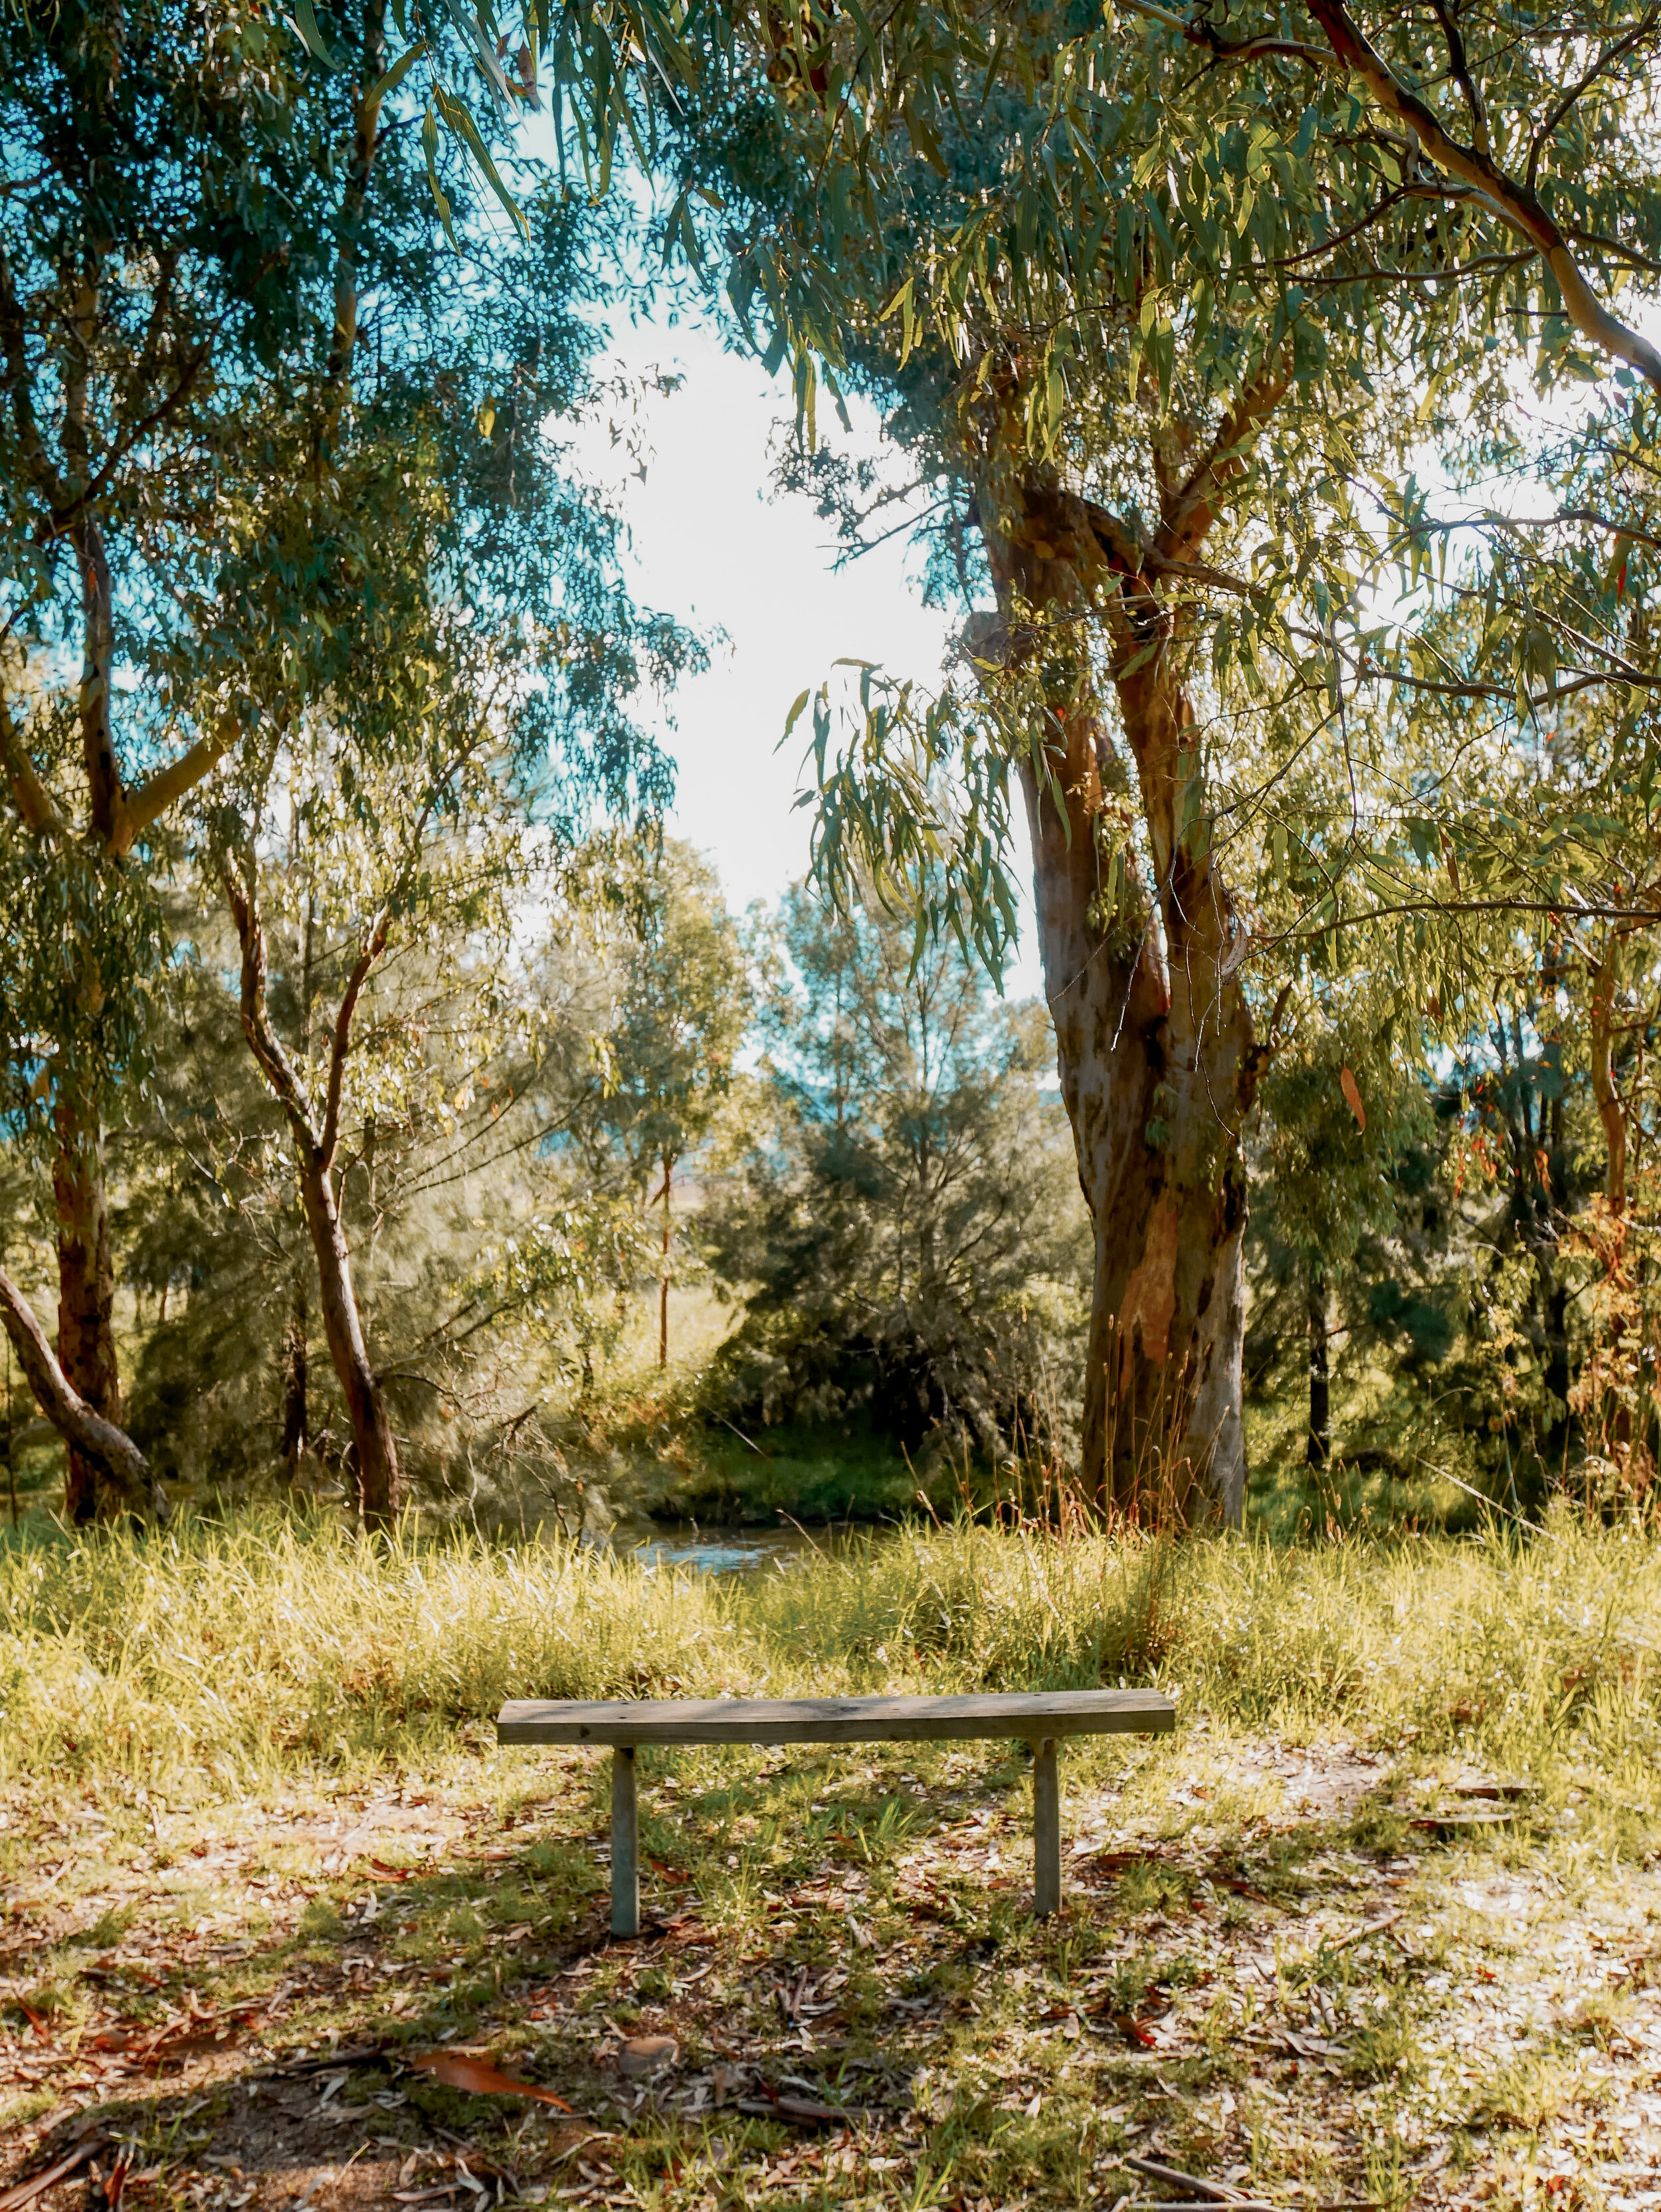 Wooden bench in Putta Bucca - Mudgee - New South Wales (NSW) - Australia